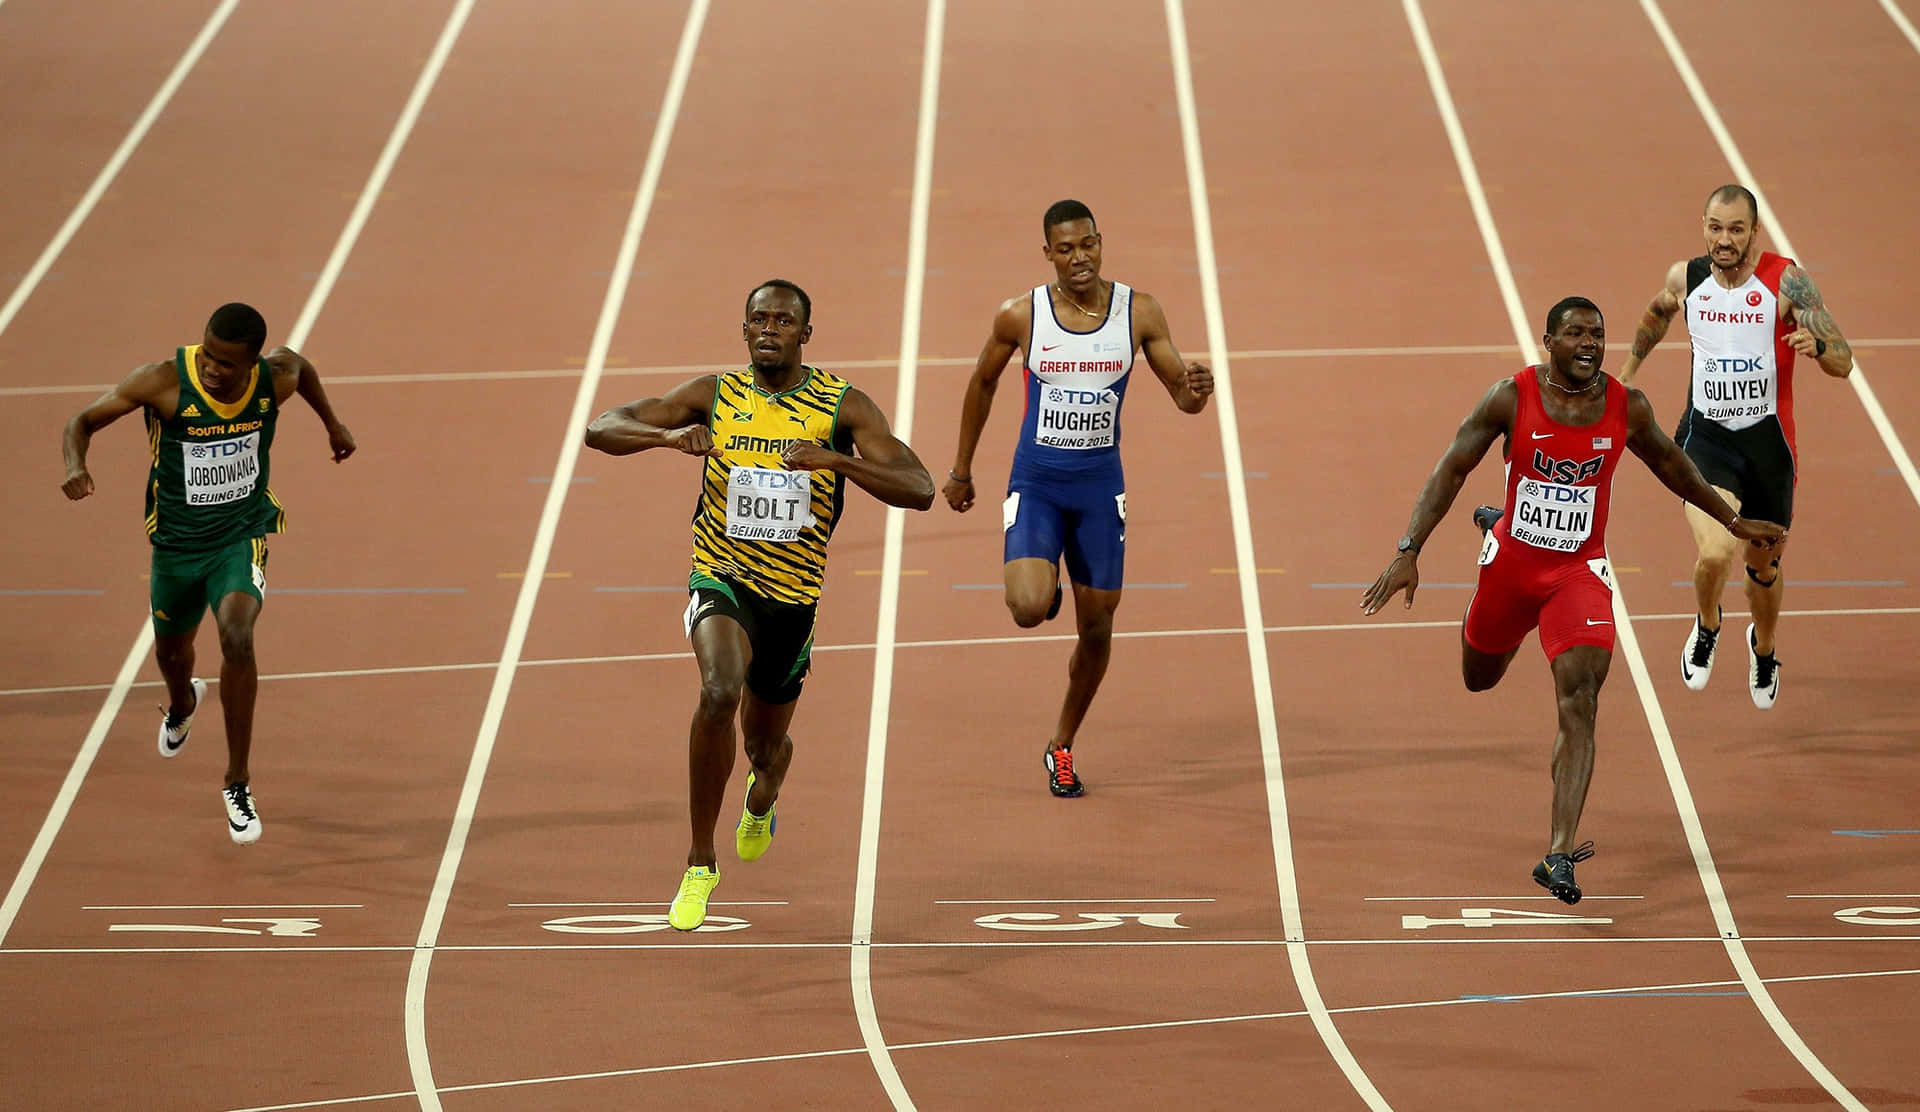 Atletajamaiquino Usain Bolt En Carrera. Fondo de pantalla